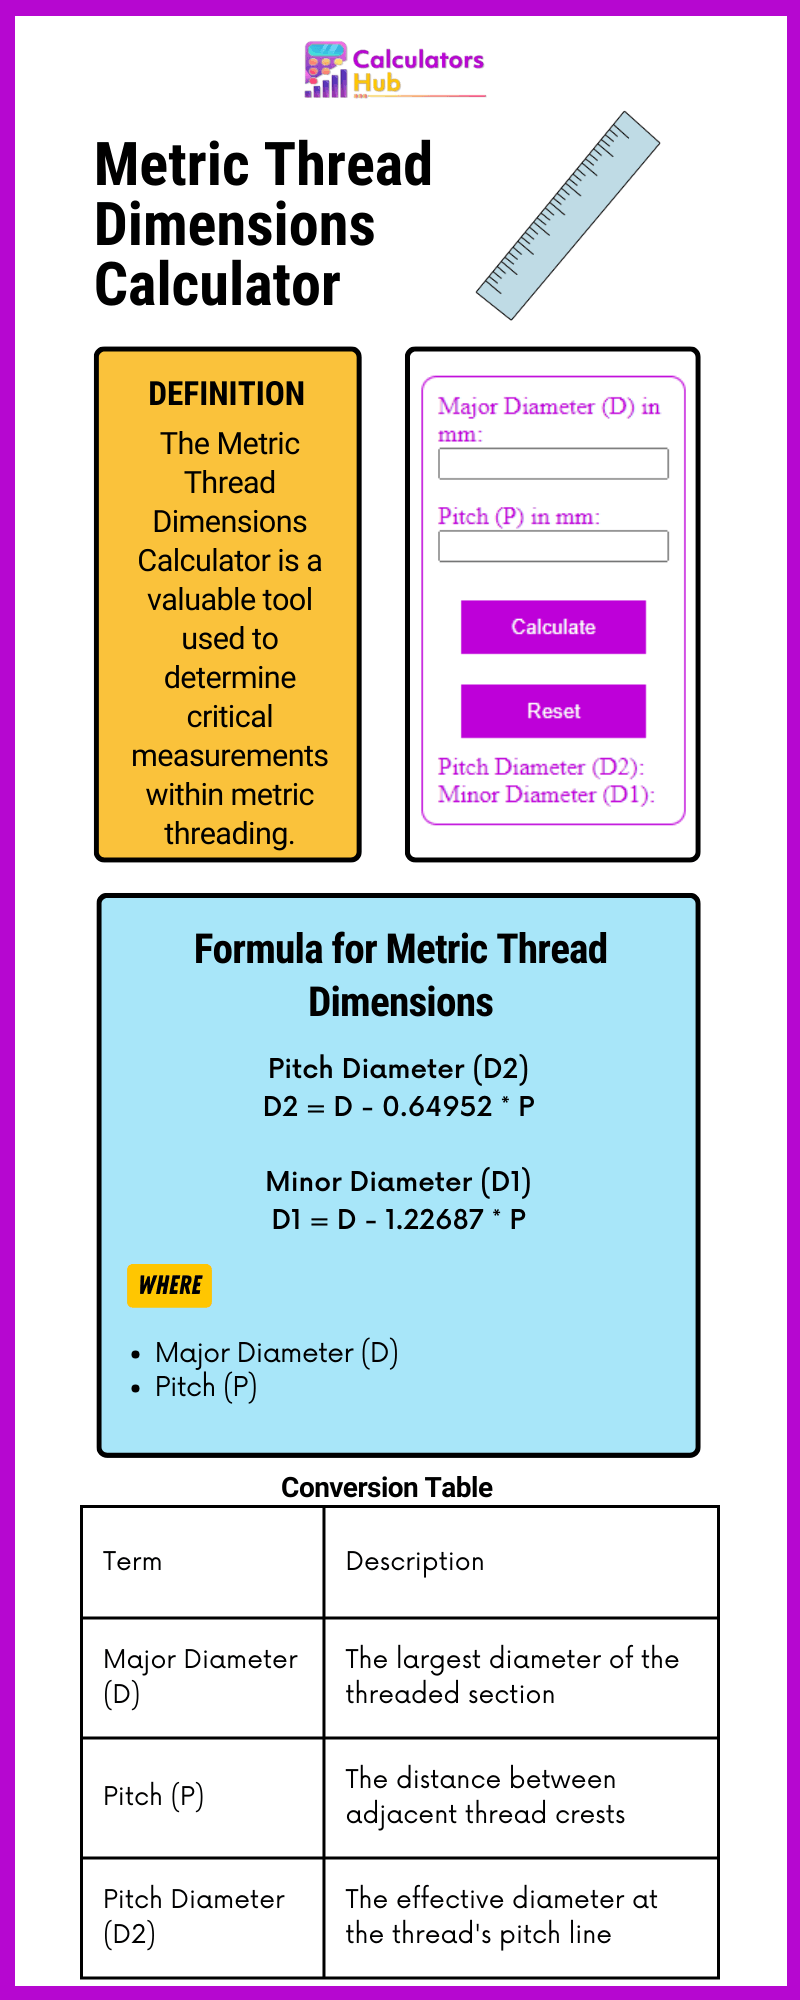 Metric Thread Dimensions Calculator